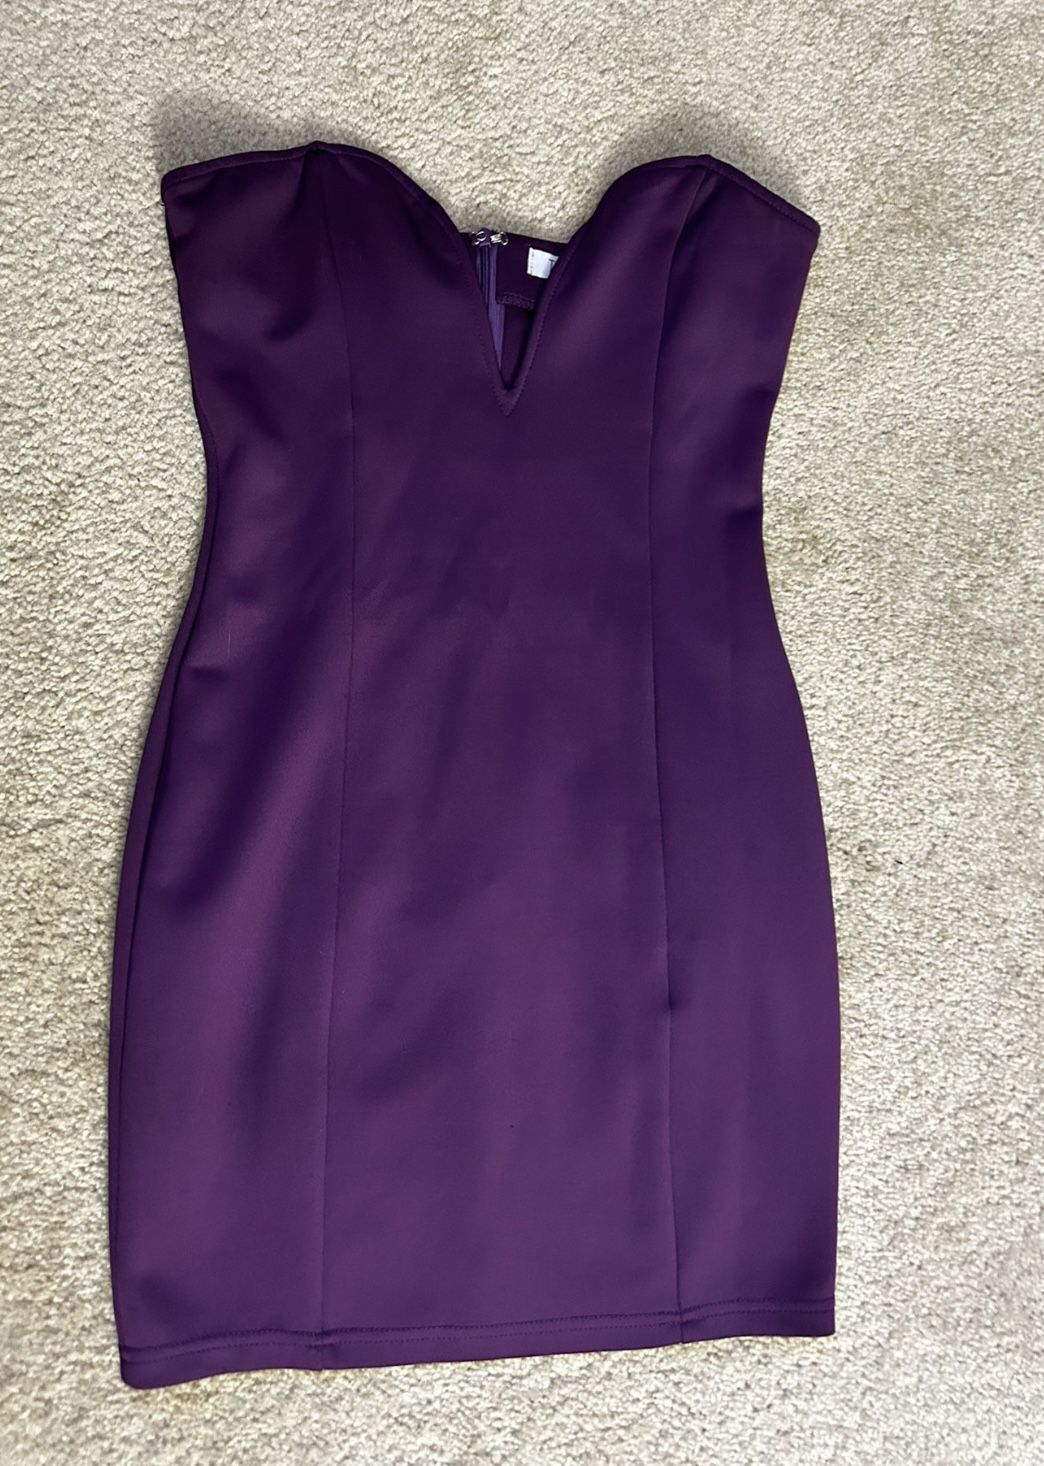 Purple Dress - Small